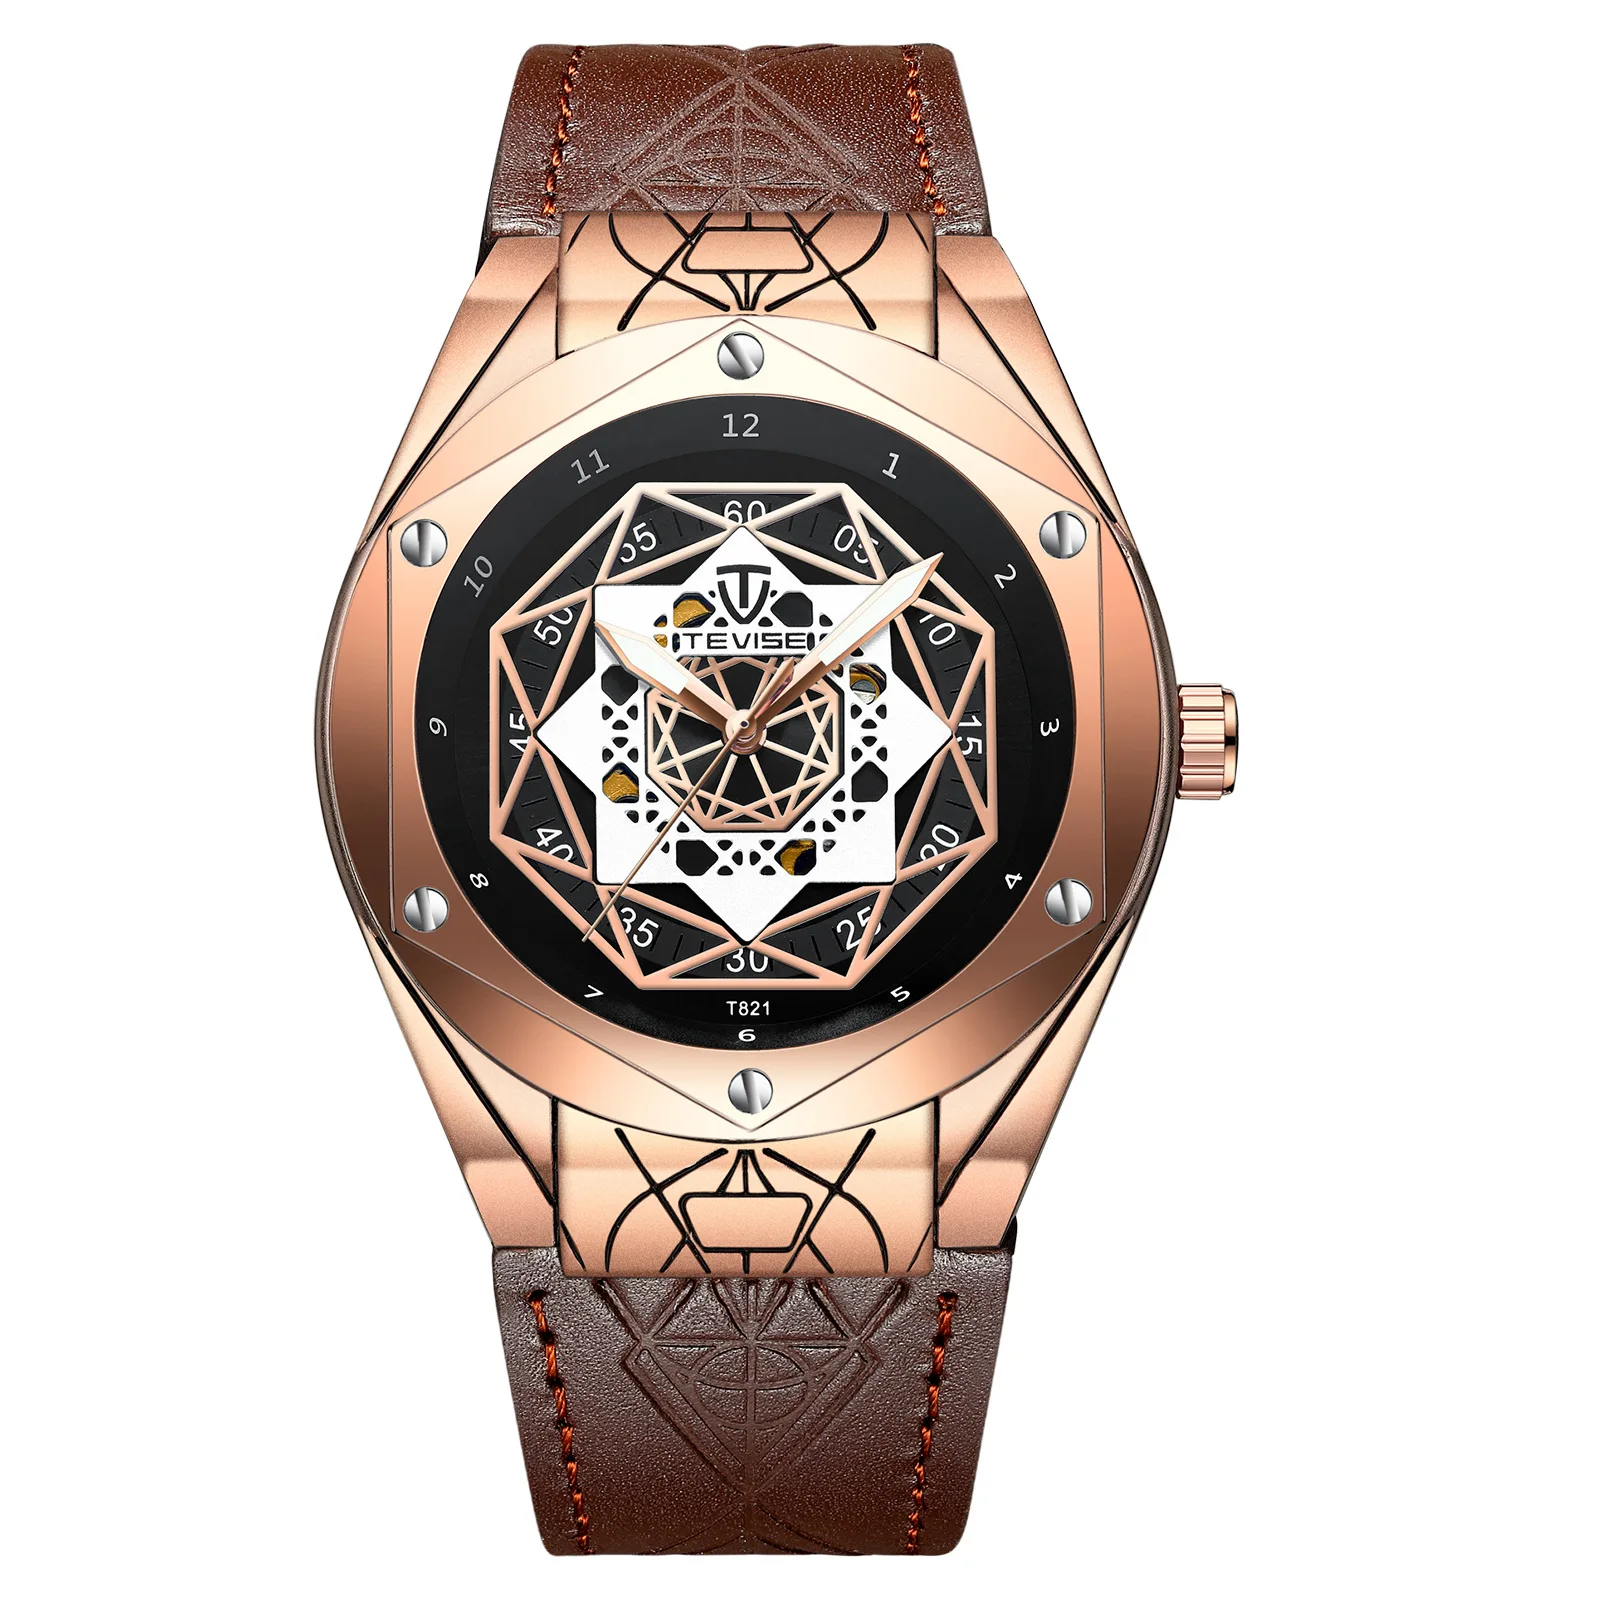 Automatic mechanical watch men's spider waterproof watch Leather Watch